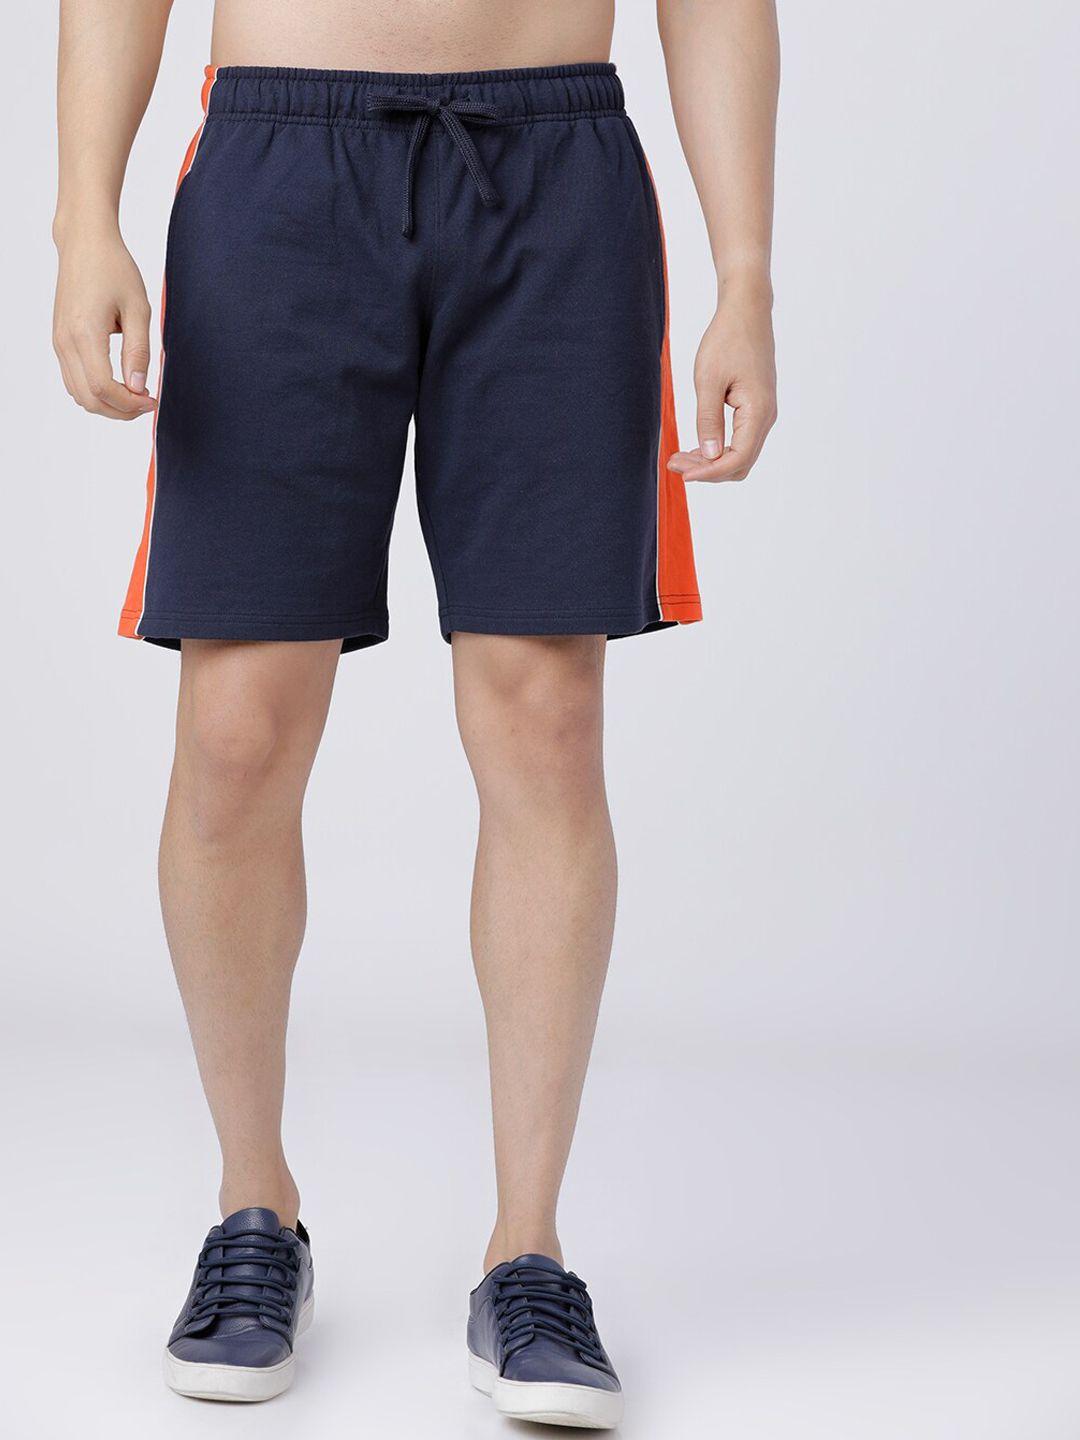 locomotive men navy blue & orange colourblocked slim fit sports shorts